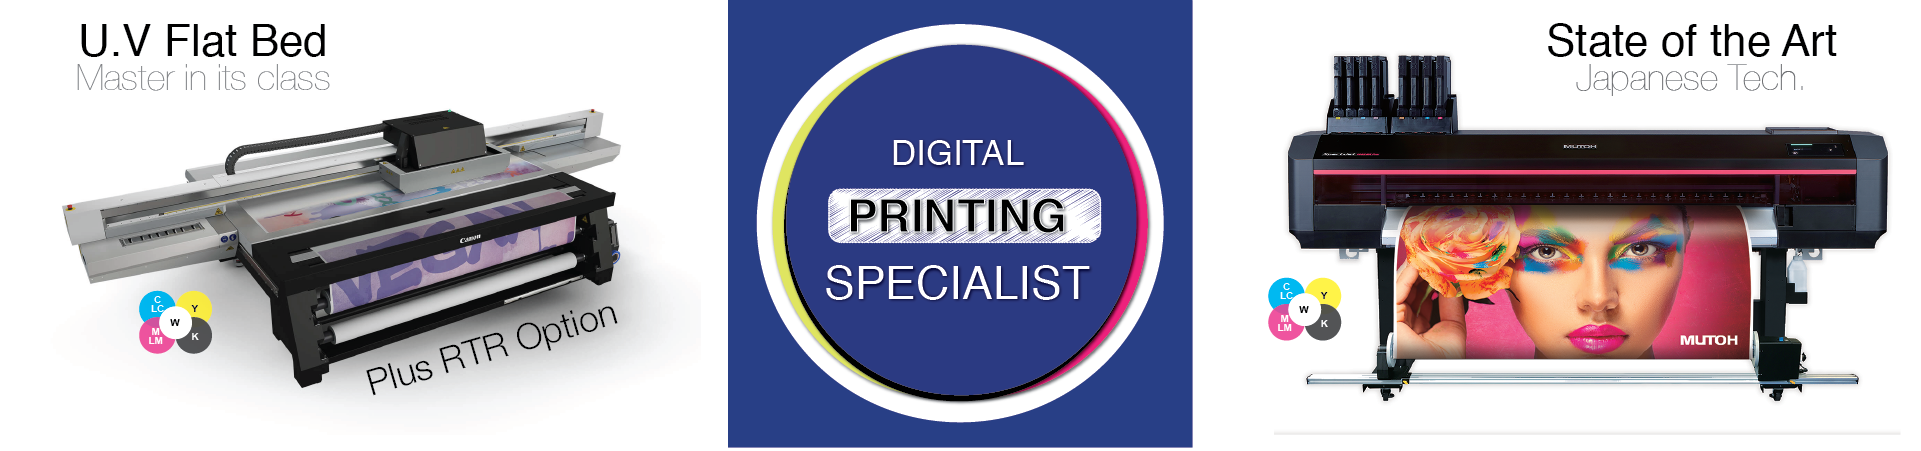 Digital Printing specialist large format printer